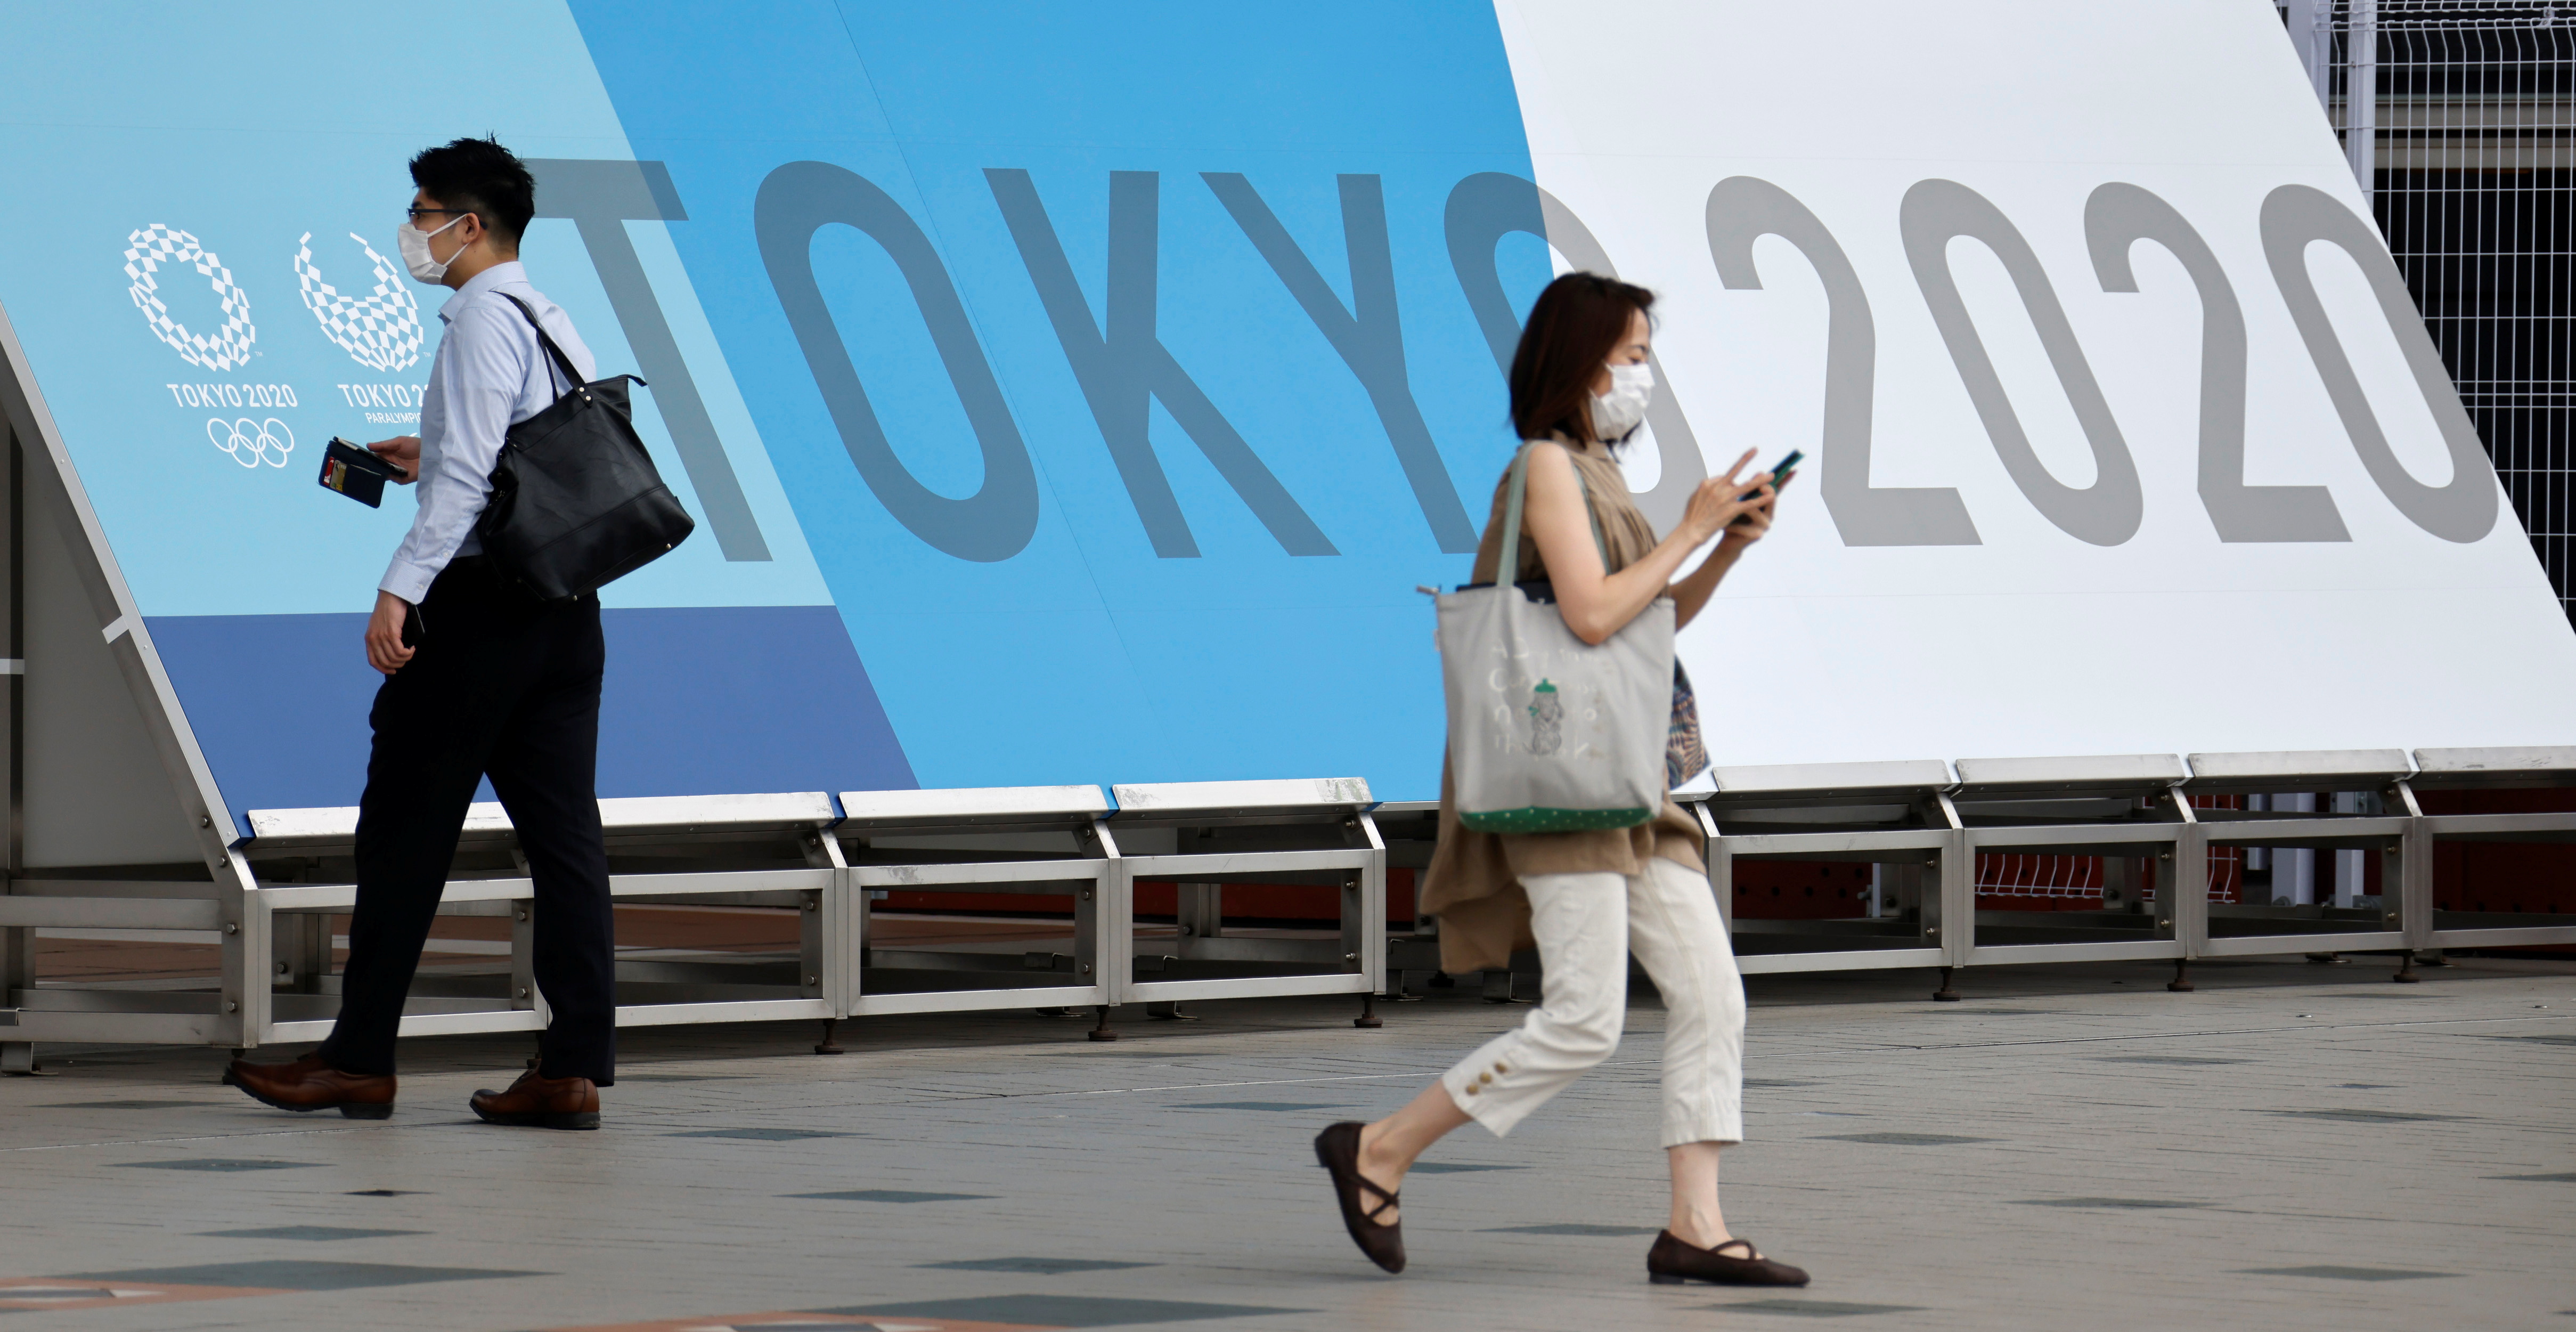 olympics tokyo may extend coronavirus curbs into games period -media | reuters